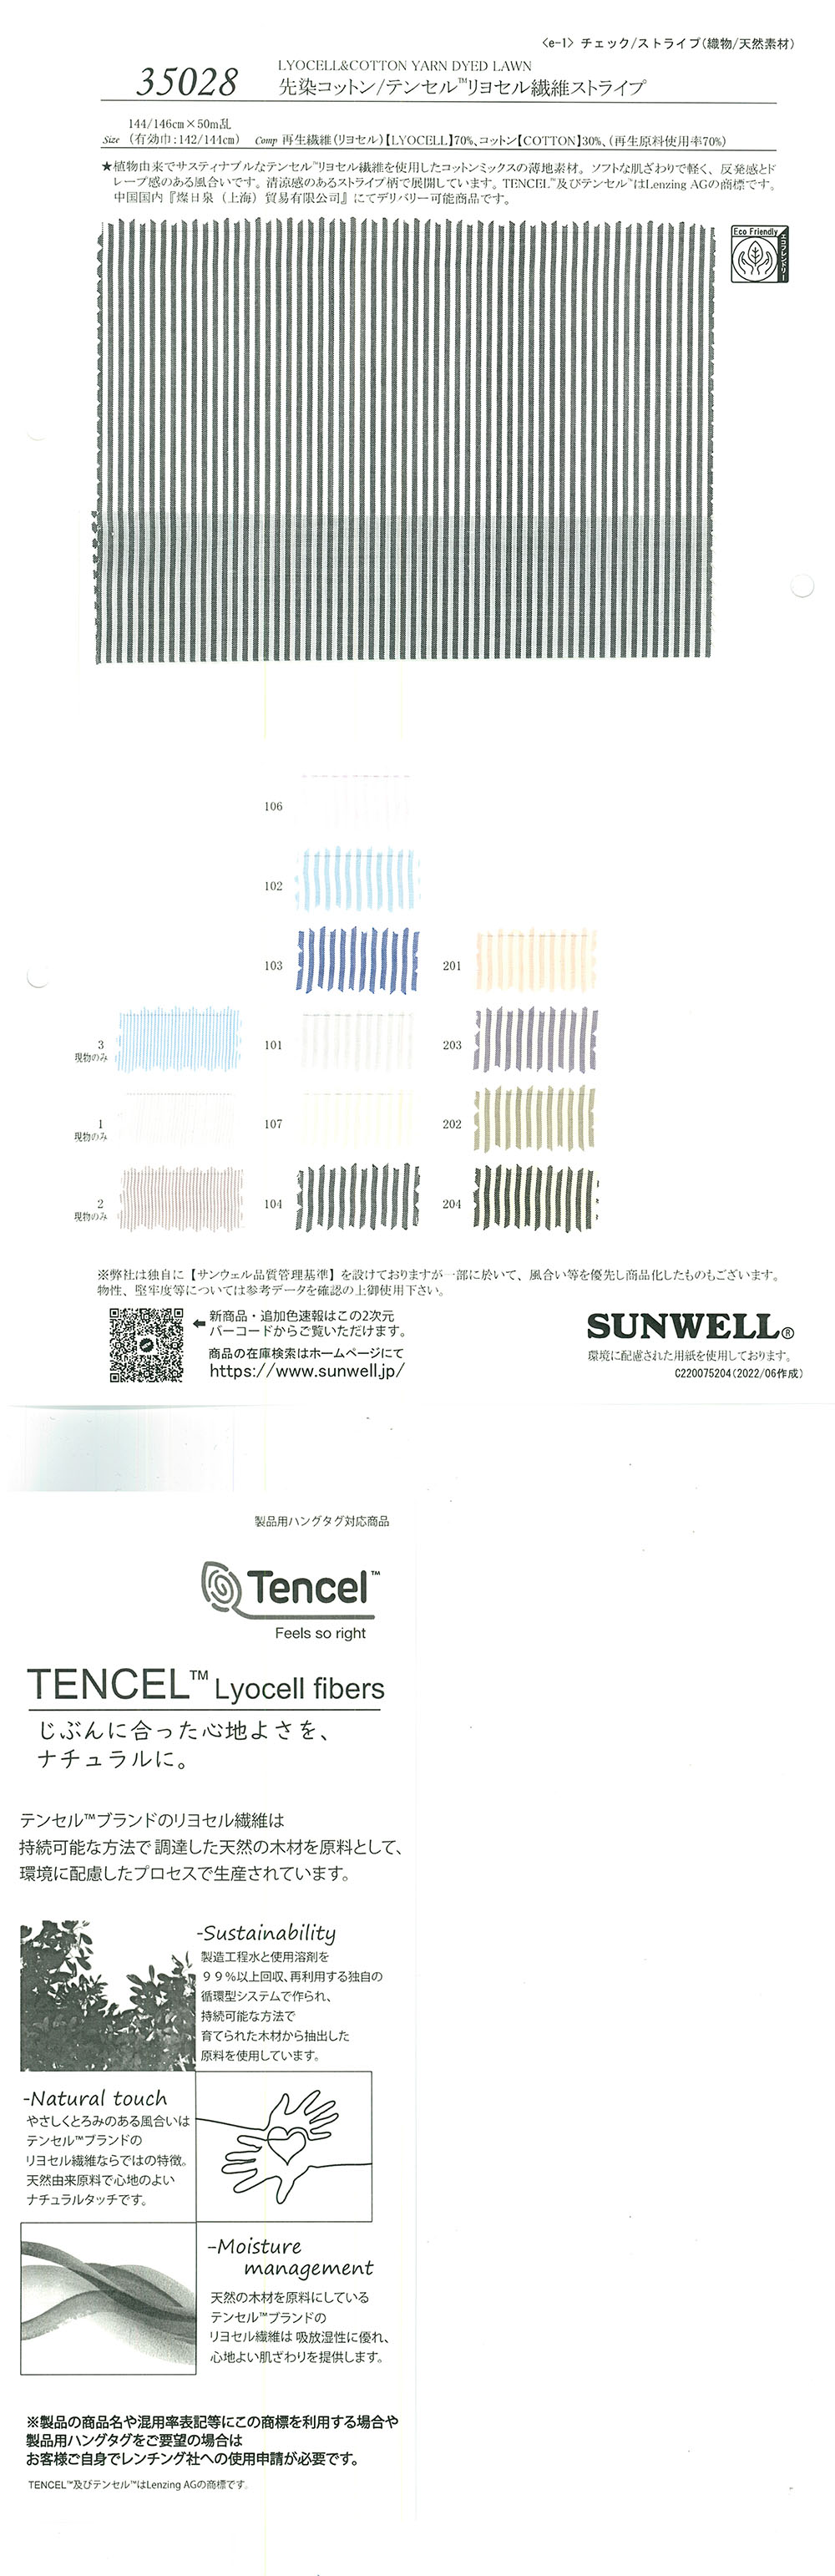 35028 Rayure En Fibre De Coton/Tencel(TM) Lyocell Teint En Fil[Fabrication De Textile] SUNWELL